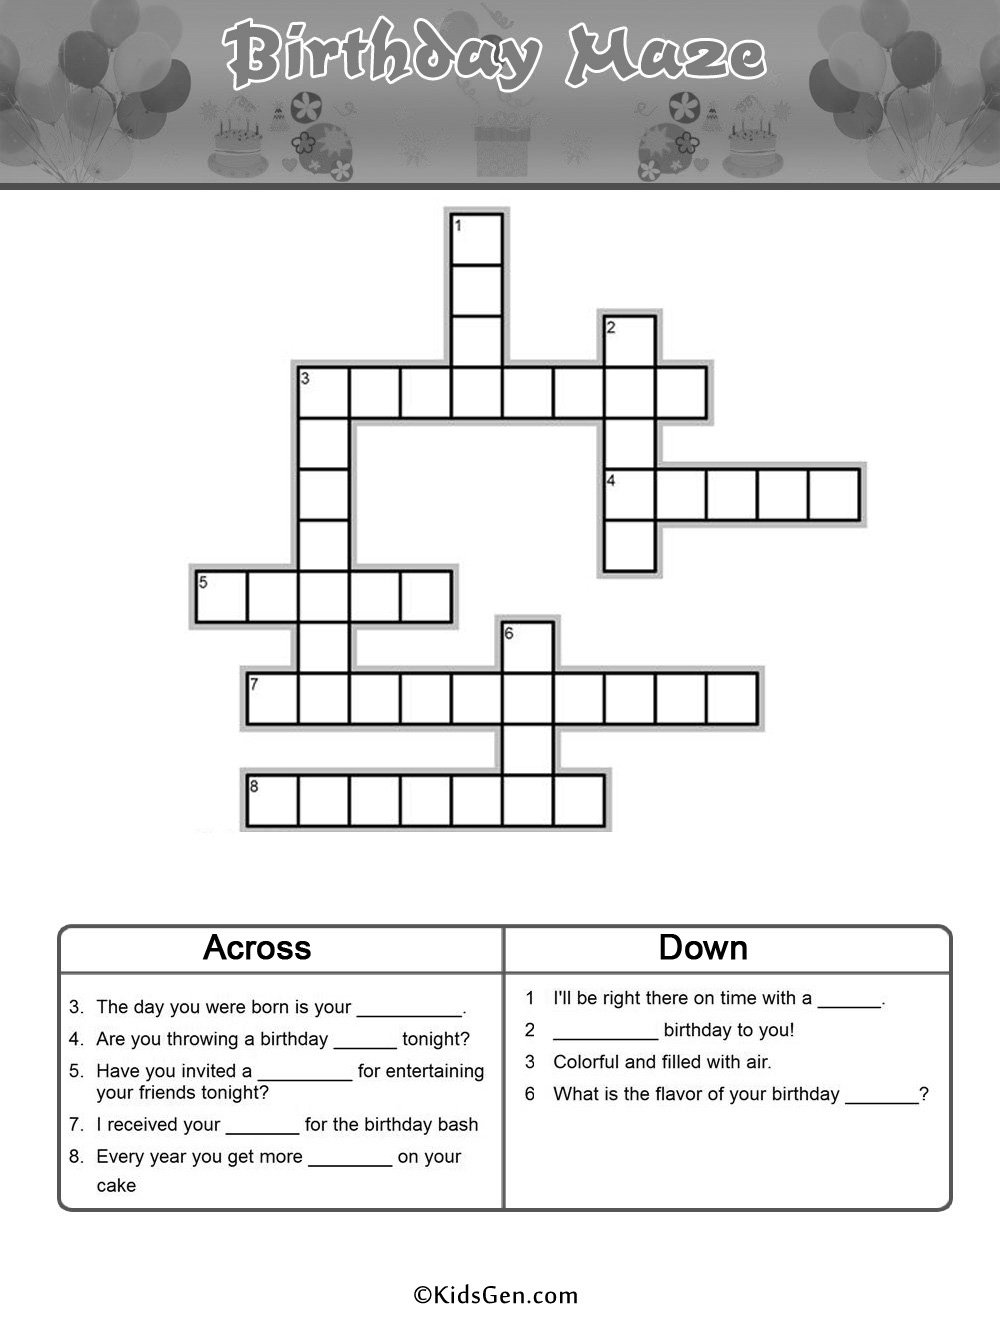 Black and White Crossword Puzzle